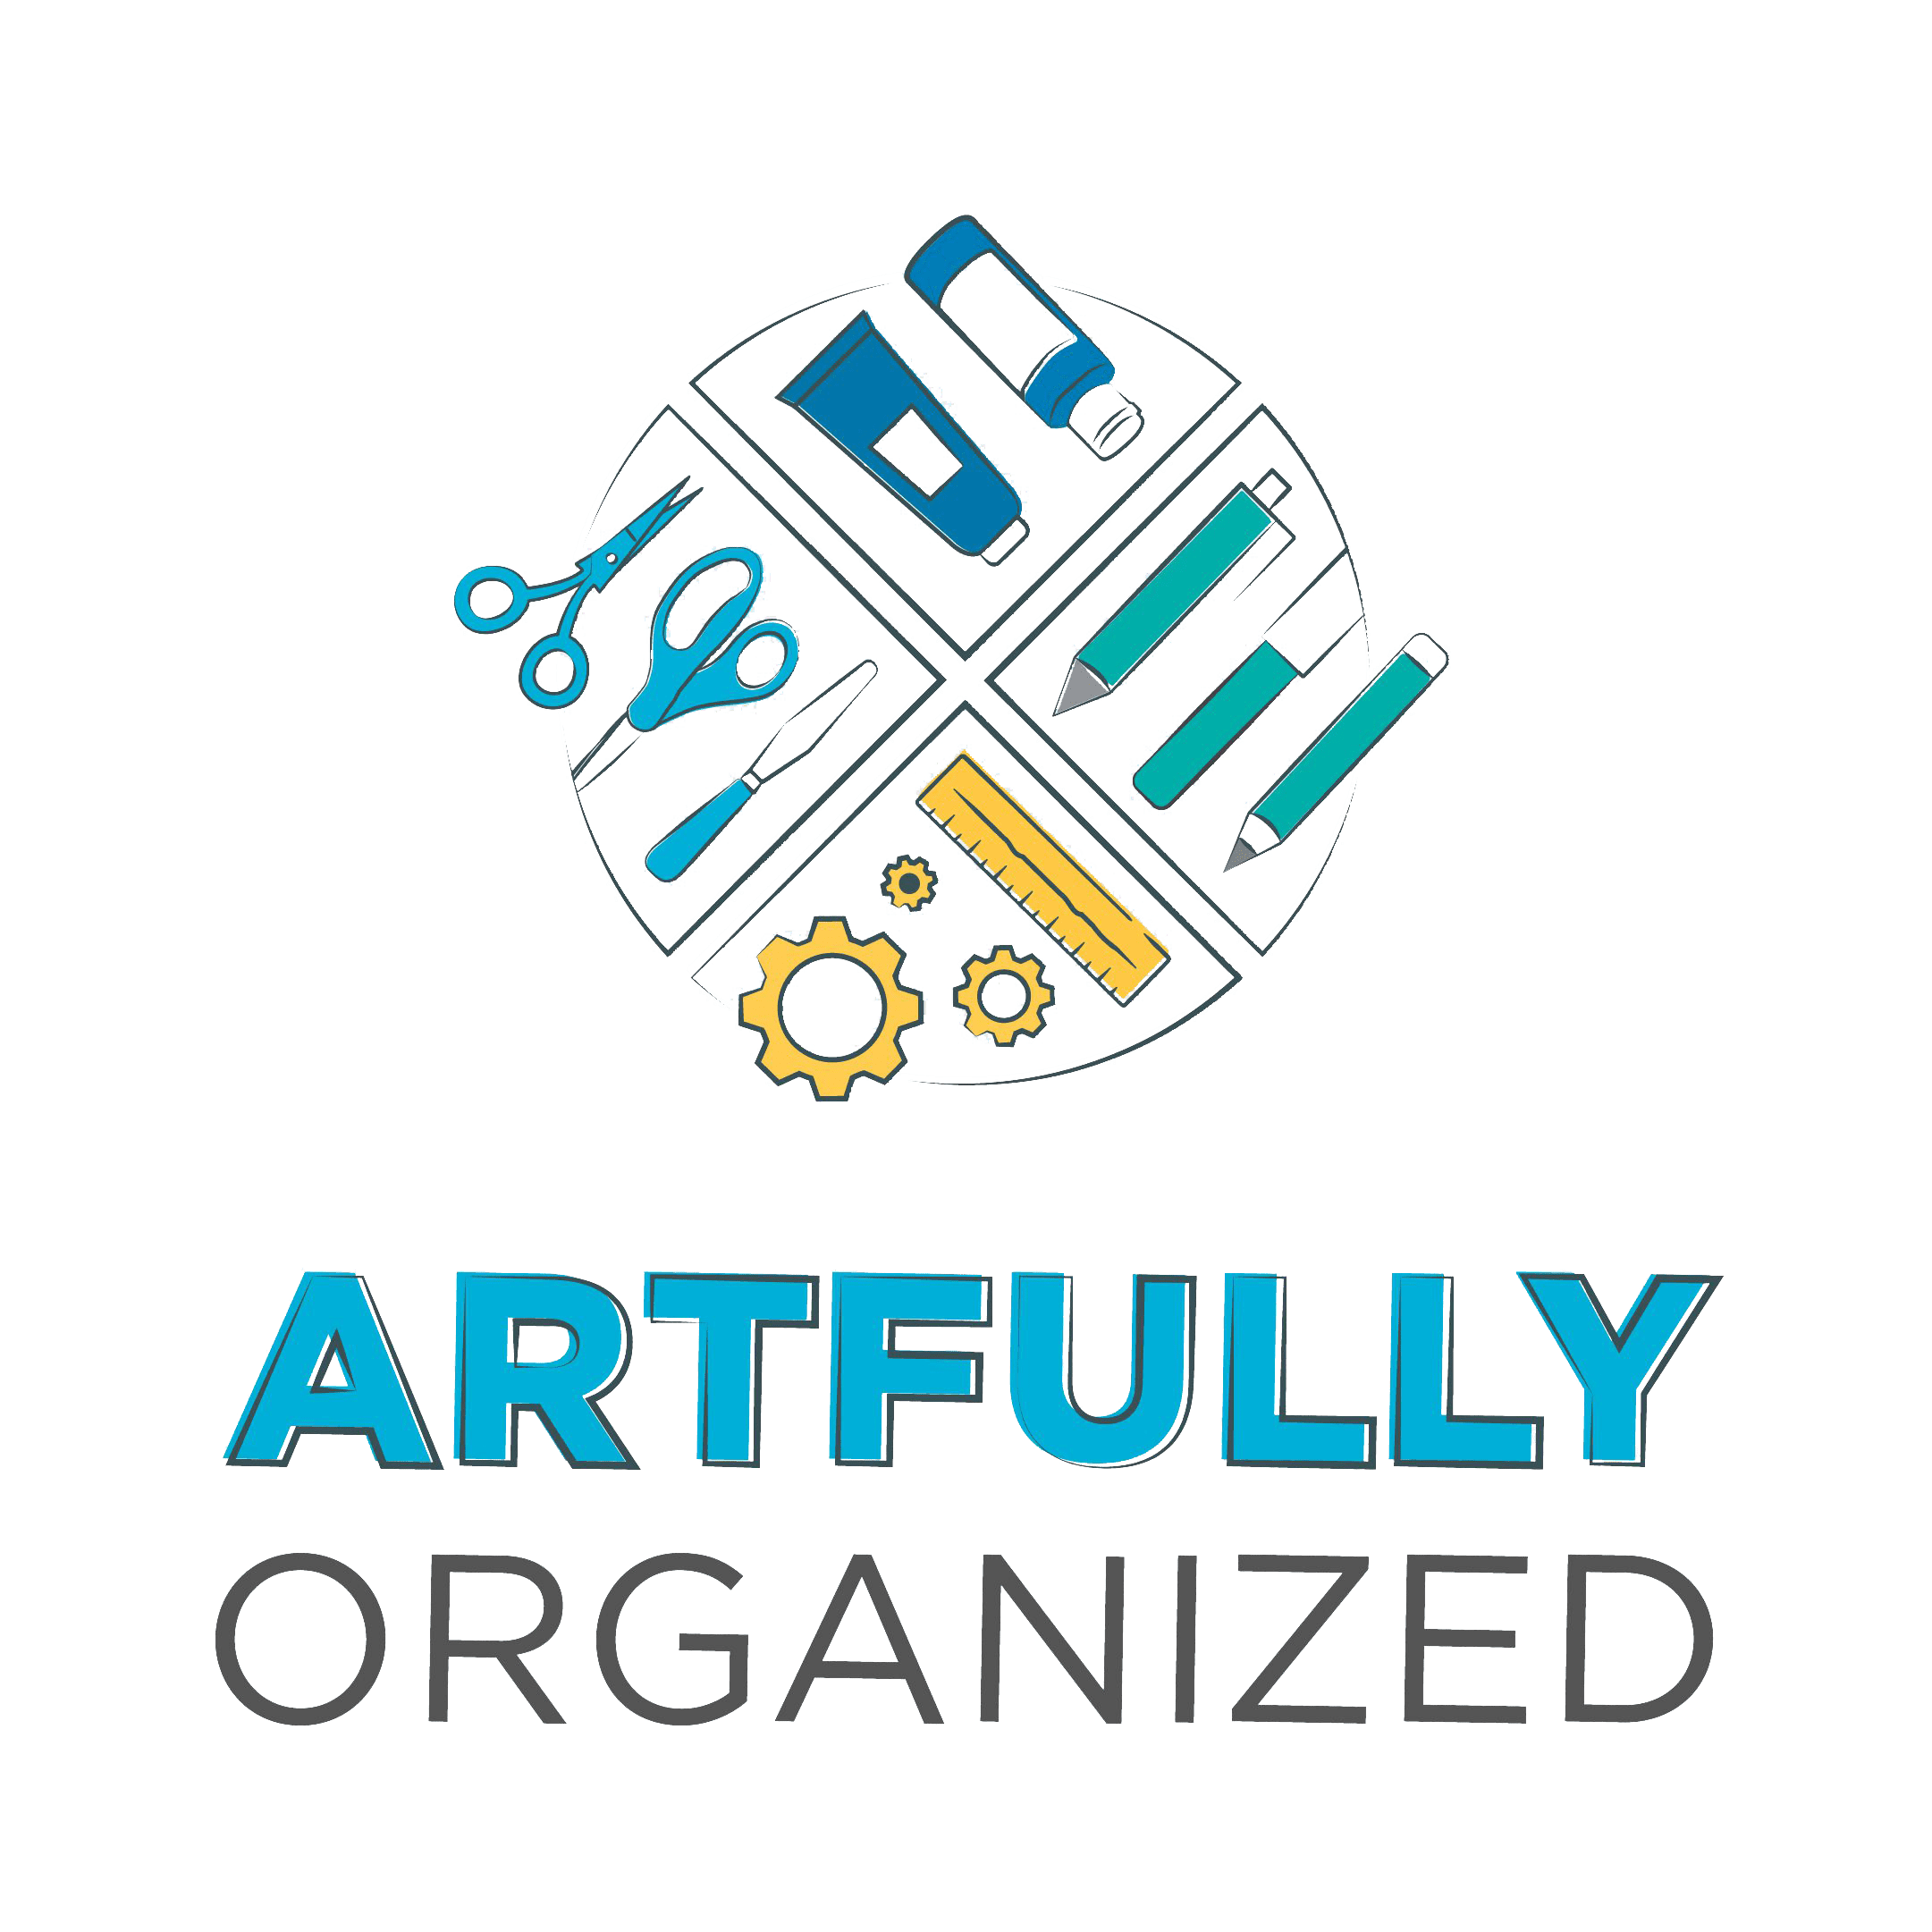 Artfully Organized YouTube Series Logo showing art supplies artistically organized in a circular shape